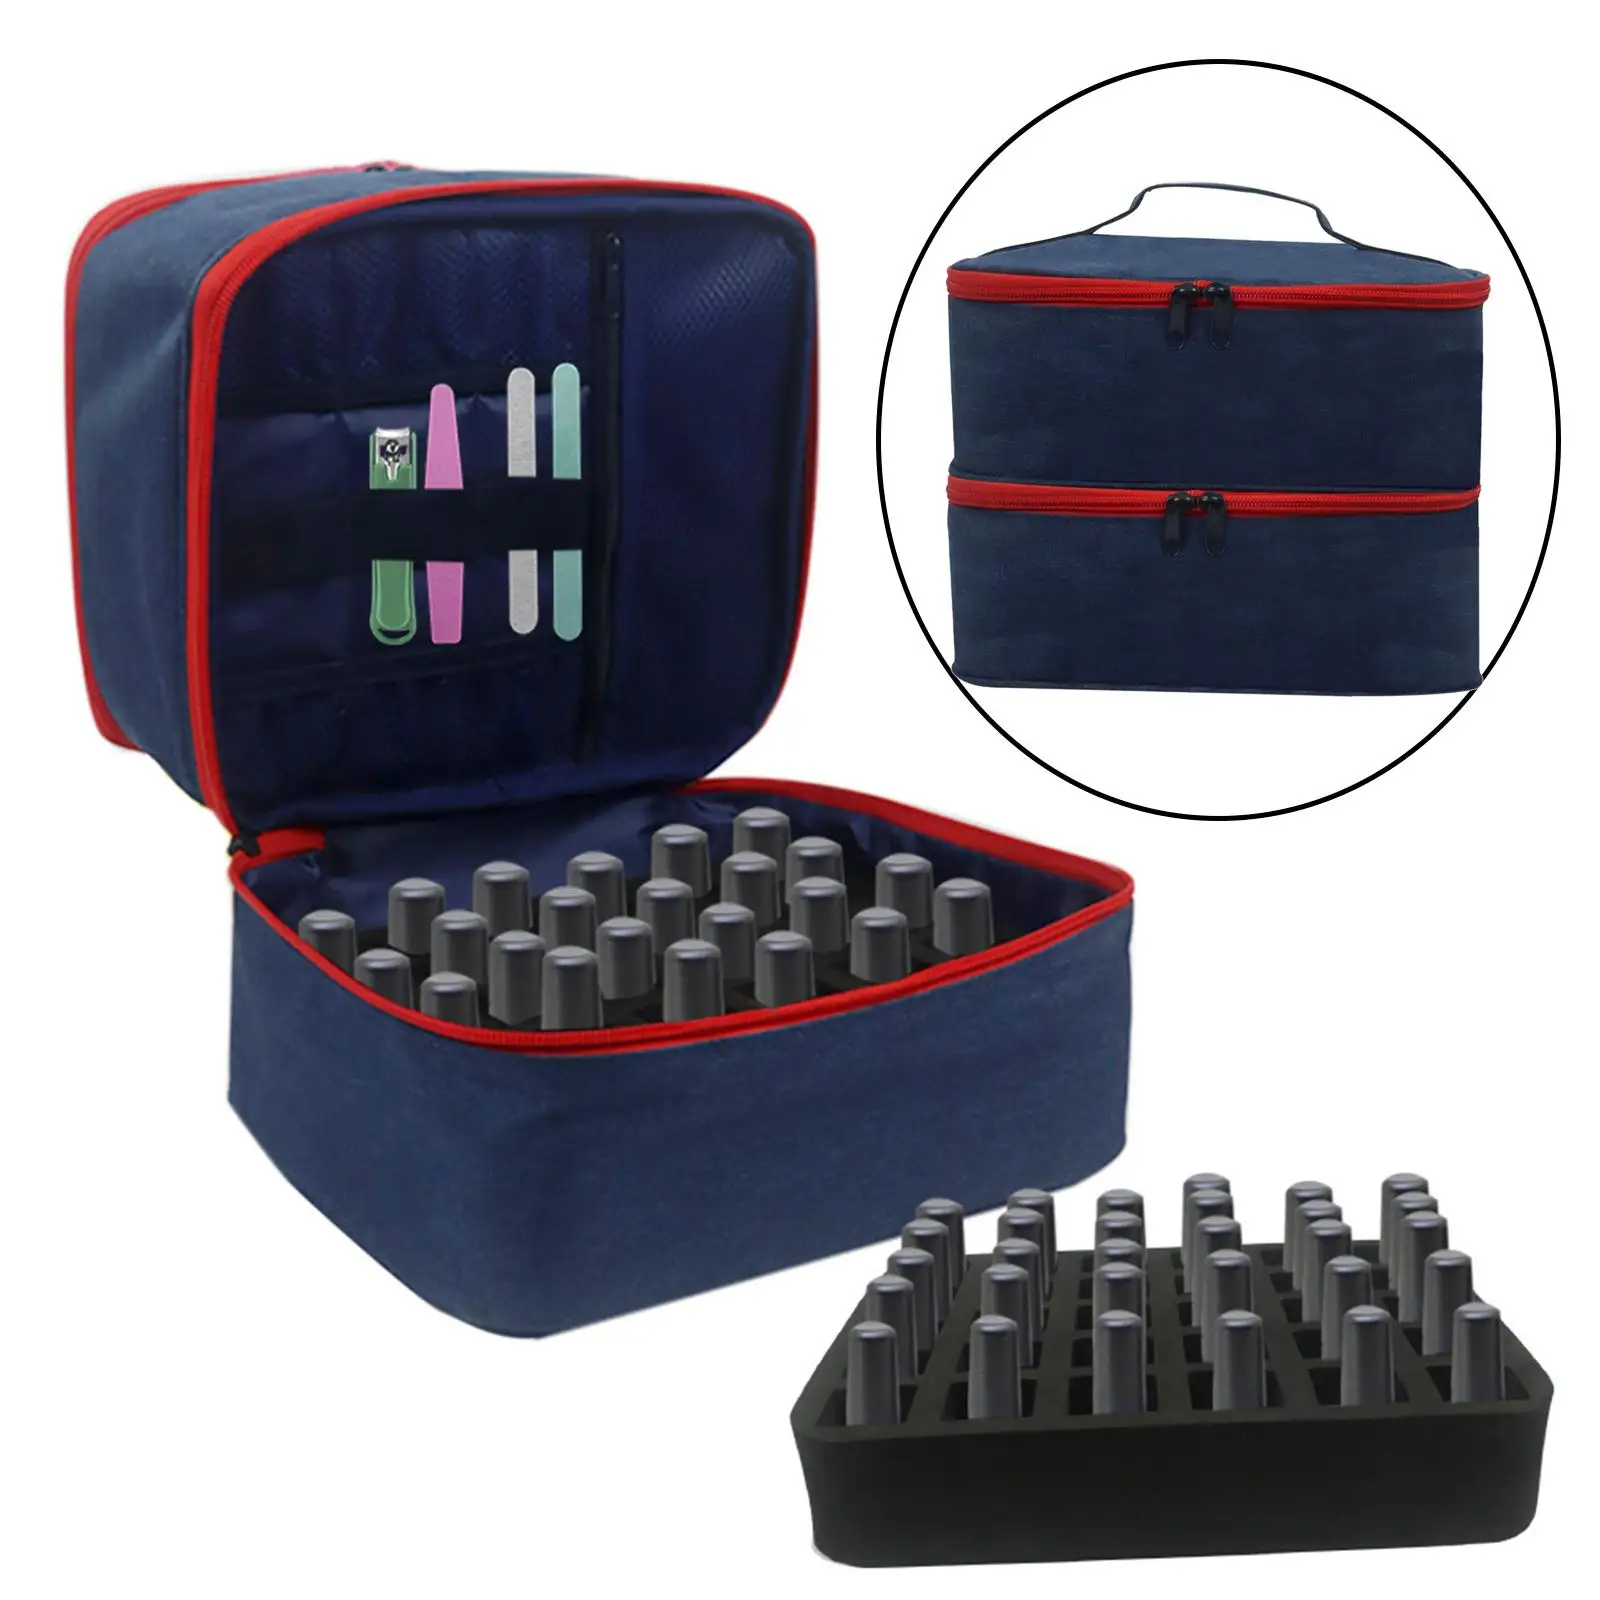 Nail Polish Storage Bag Portable Holds 30 Bottles Pockets for Blue Travel